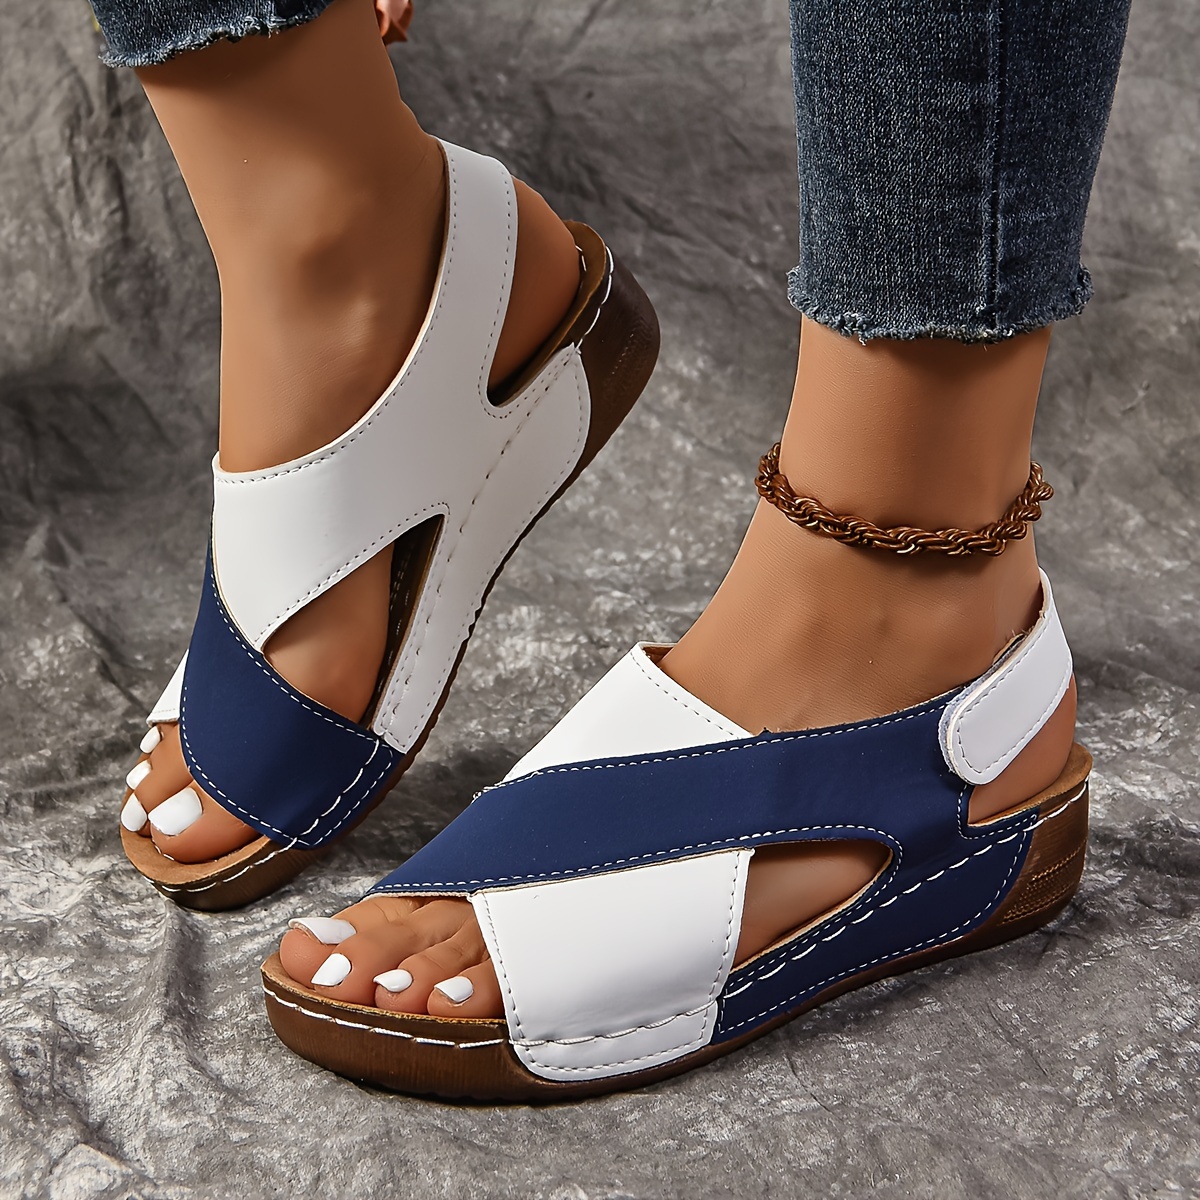 

Women's Contrast Color Casual Sandals, Crisscross Bands Platform Soft Sole Walking Shoes, Comfort Wedge Vacation Shoes